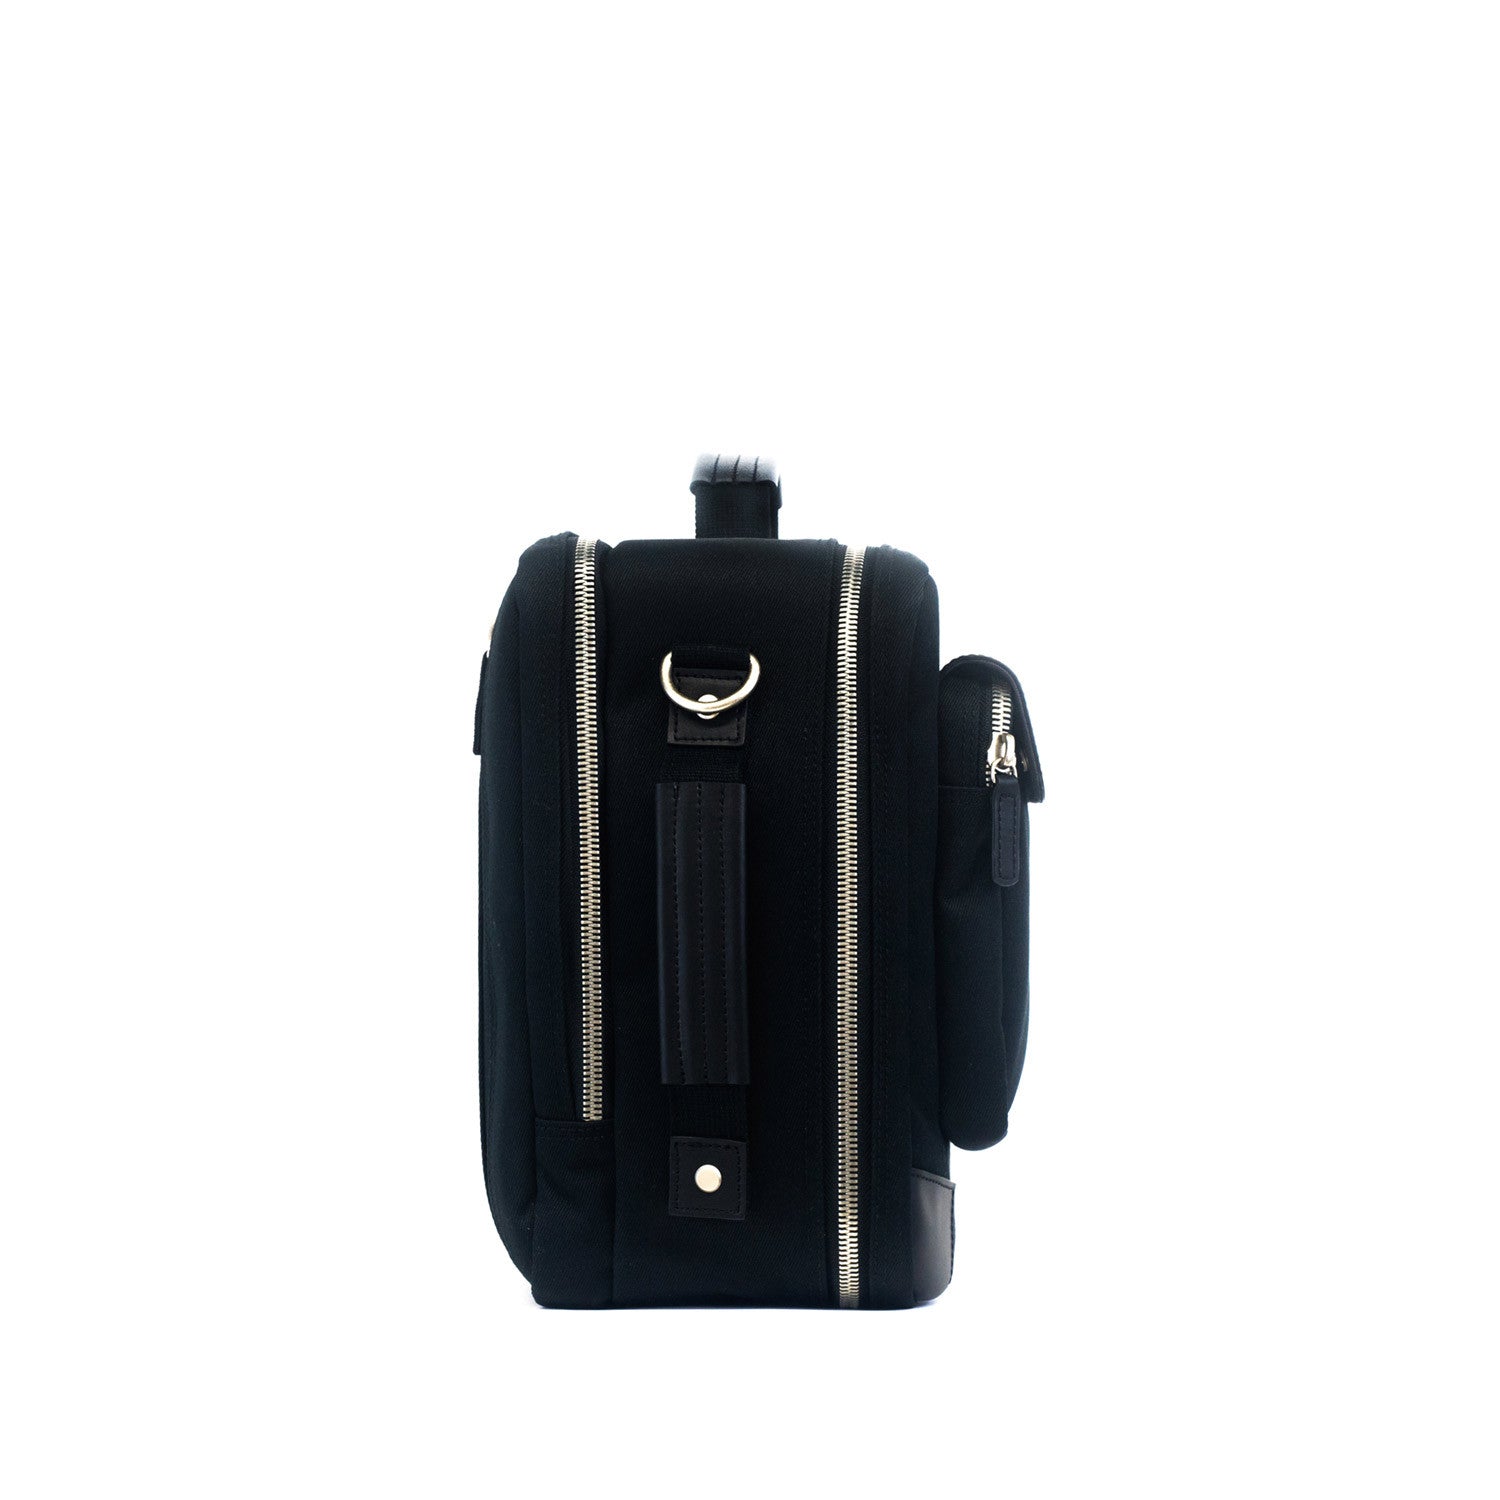 'Venque Briefpack XL' in 'Black' colour